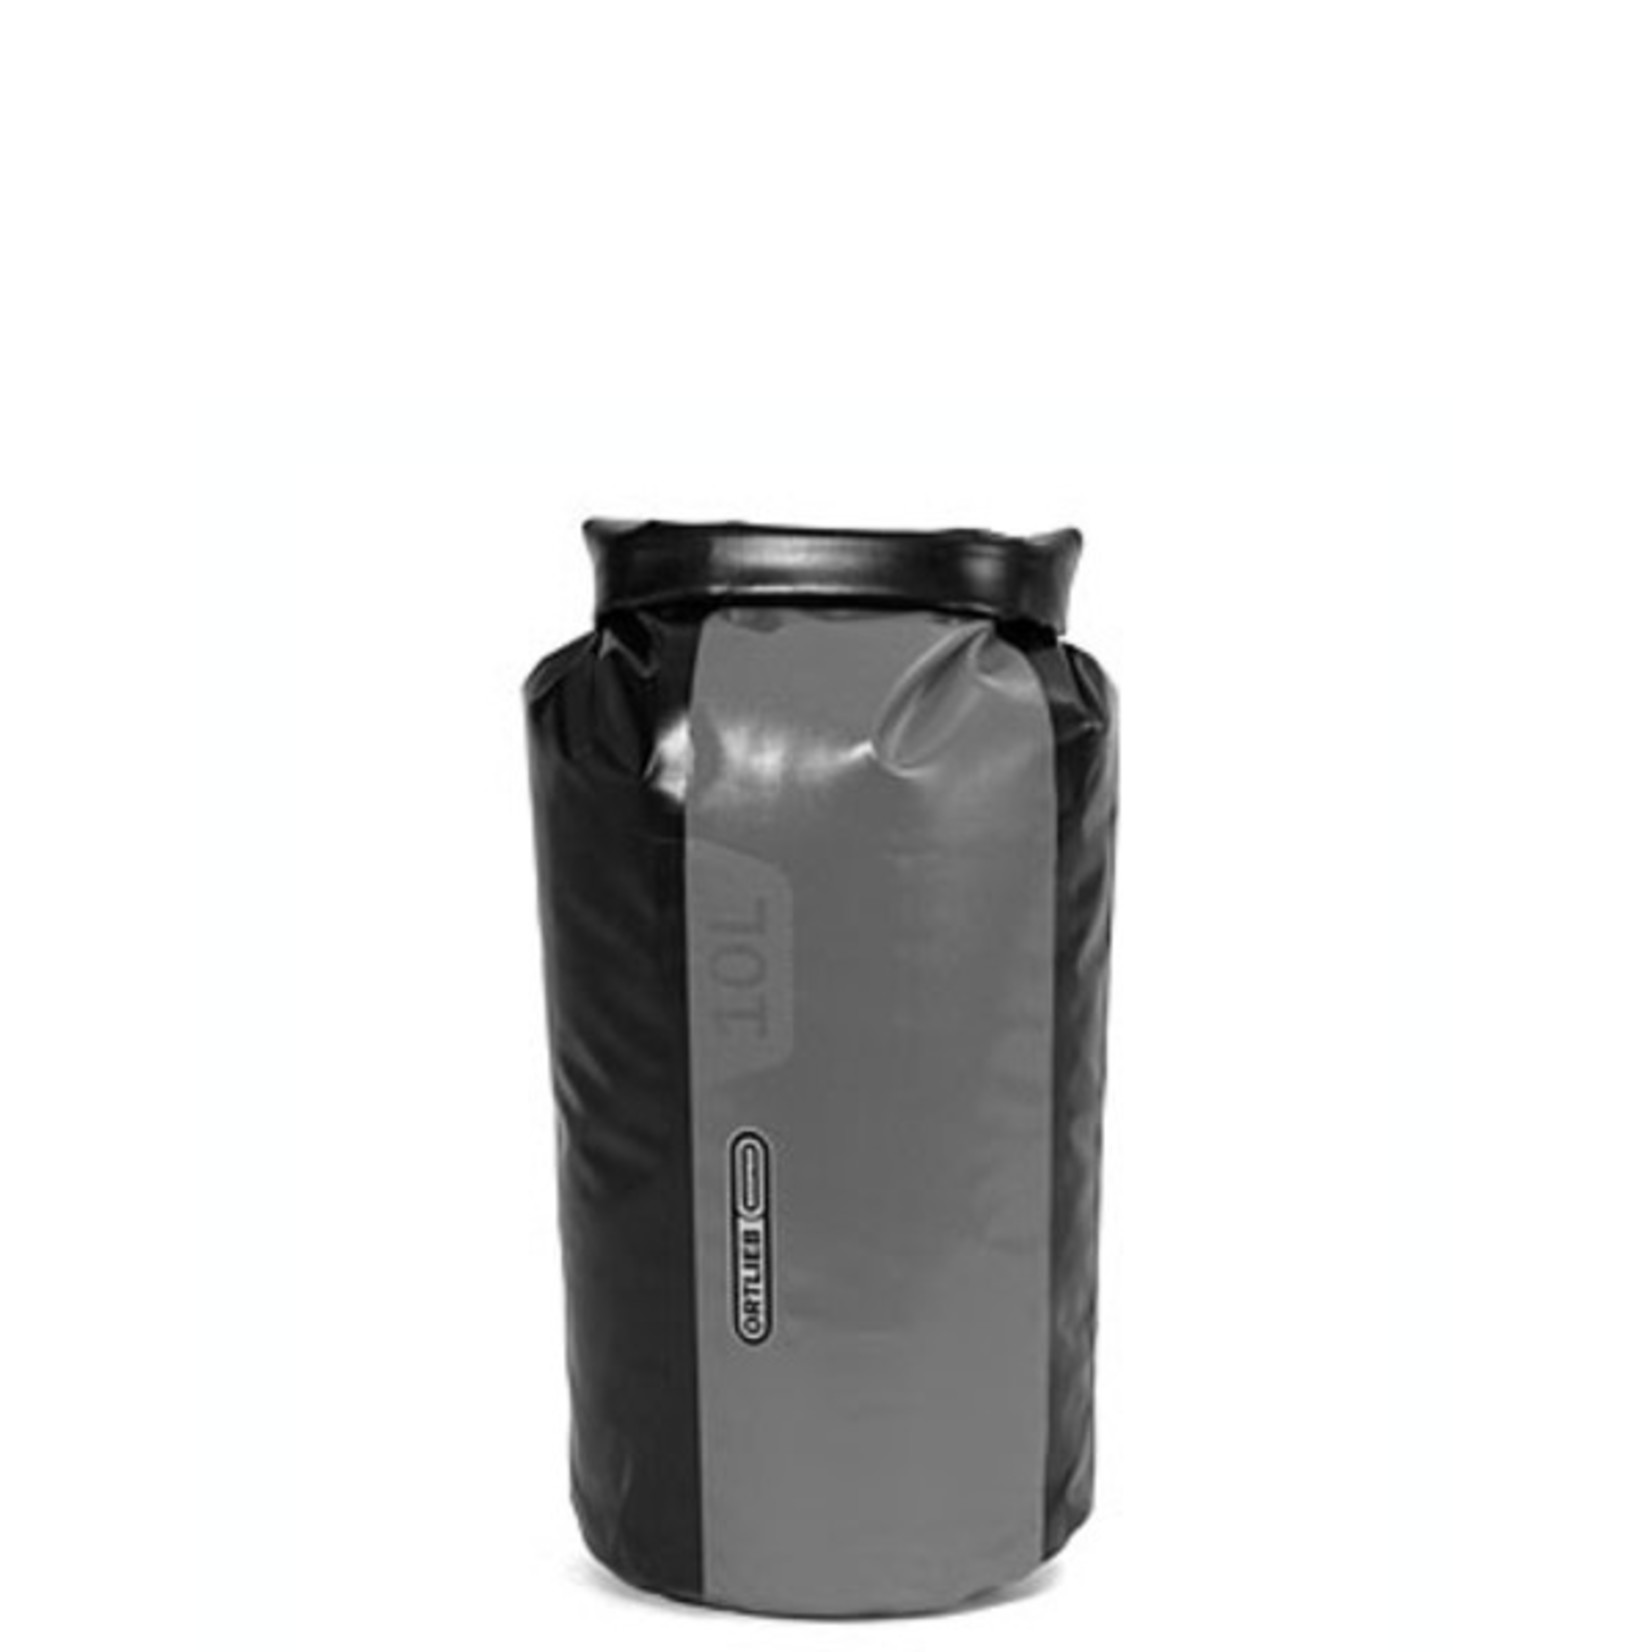 Ortlieb New Ortlieb PD 350 Dry Bag K4351 - 15-20cm/5-8Inch - 10L Black-Slate